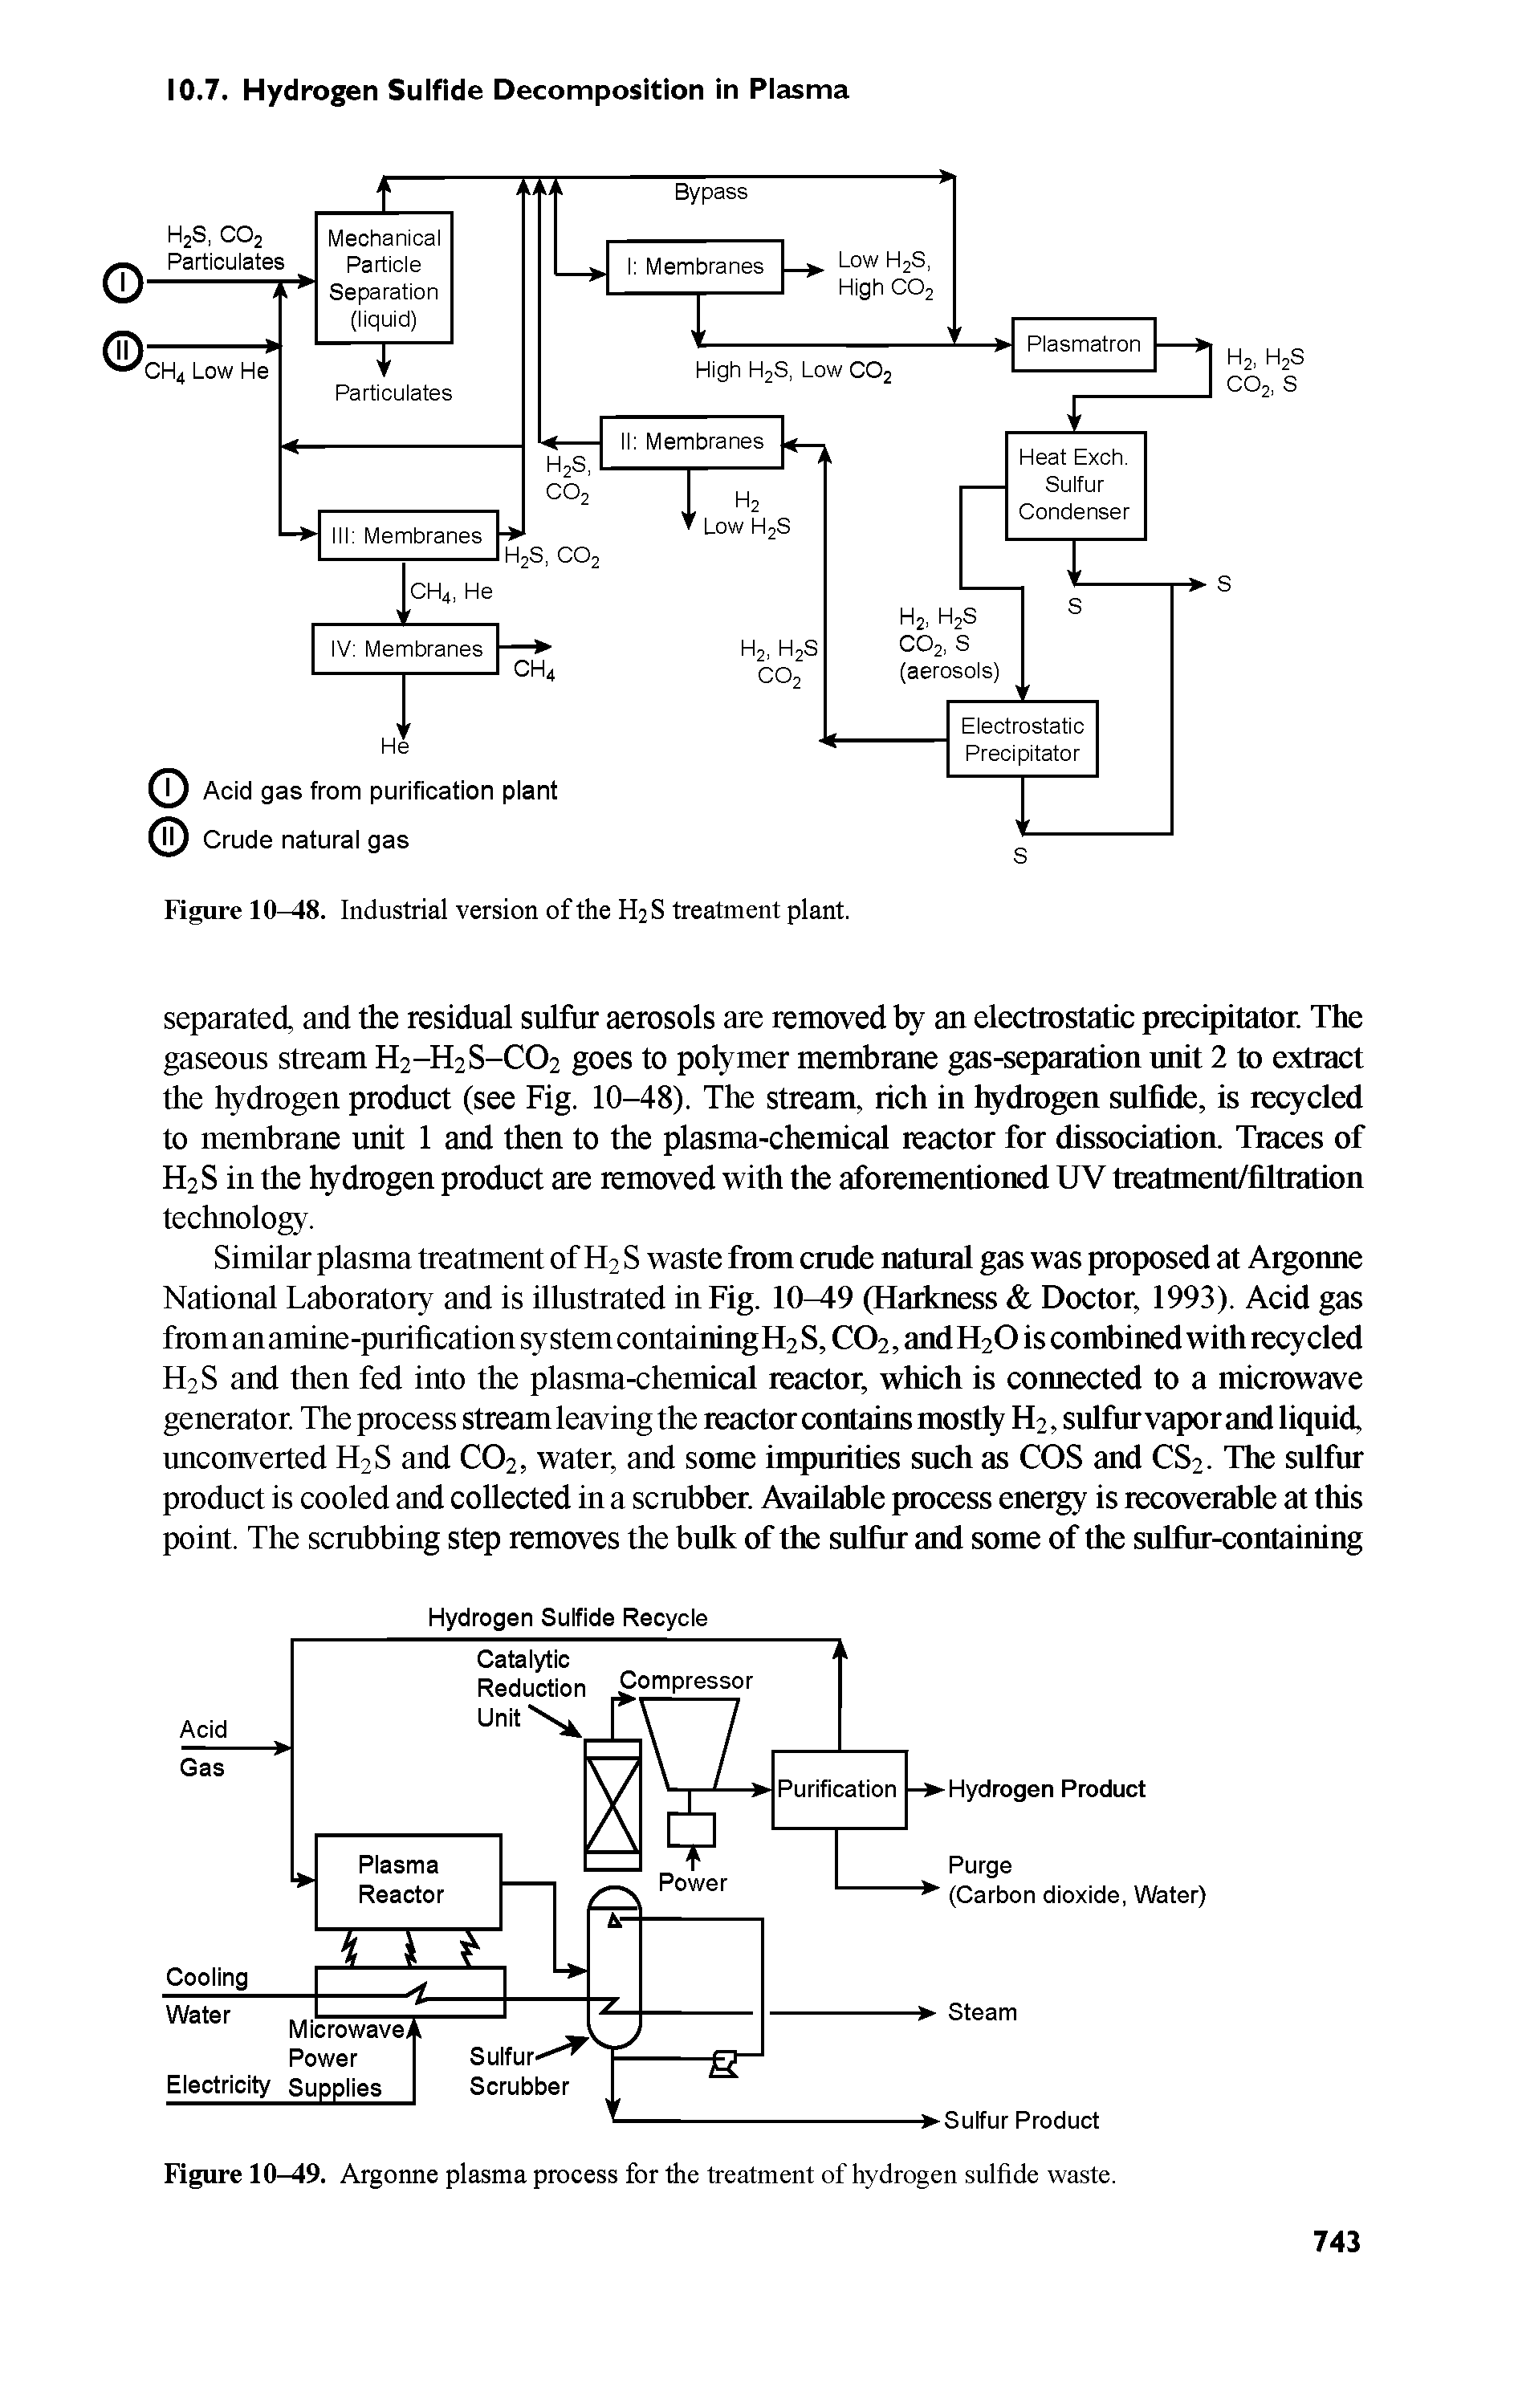 Figure 10-49. Argonne plasma process for the treatment of hydrogen sulfide waste.